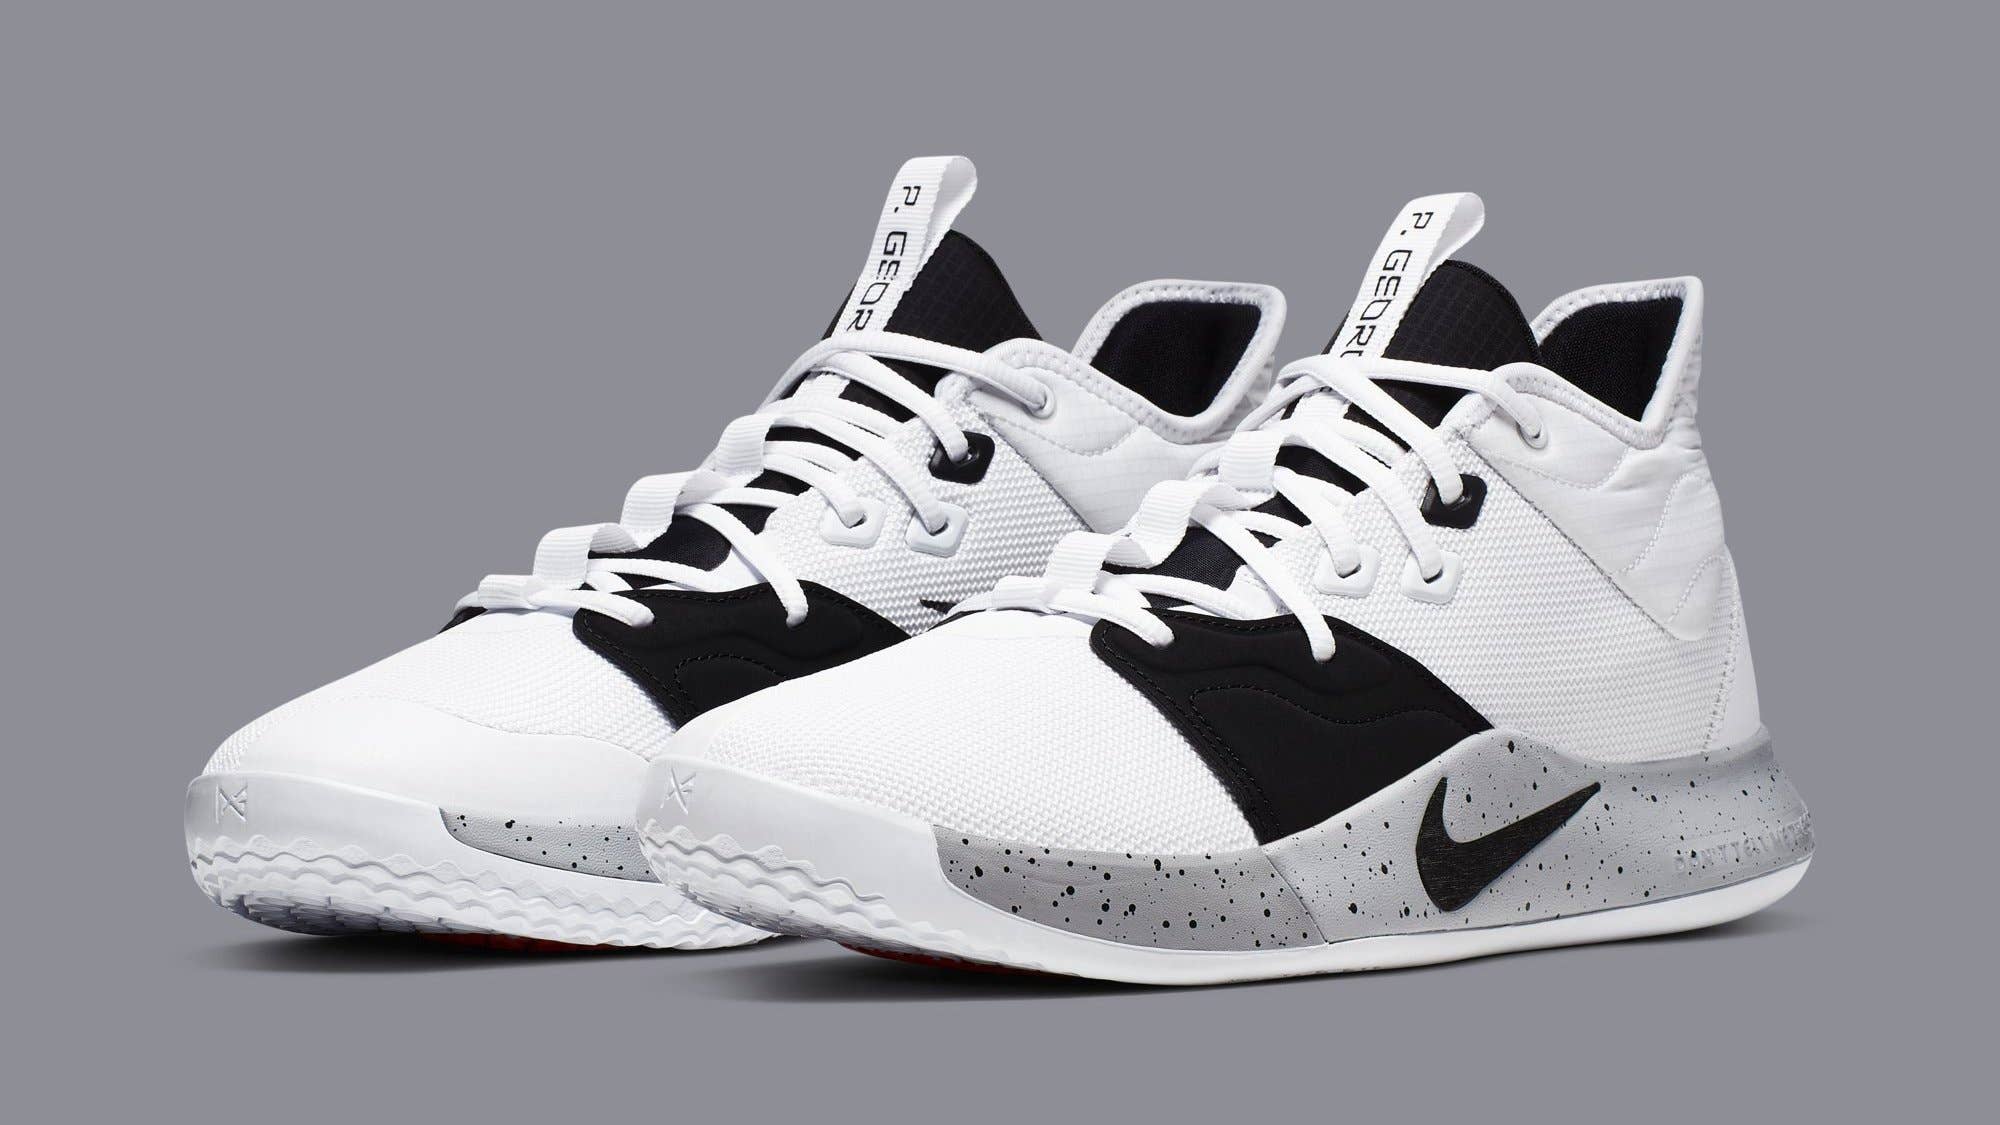 This Nike PG 3 Colorway Resembles 'White Cement' Air Jordan 4